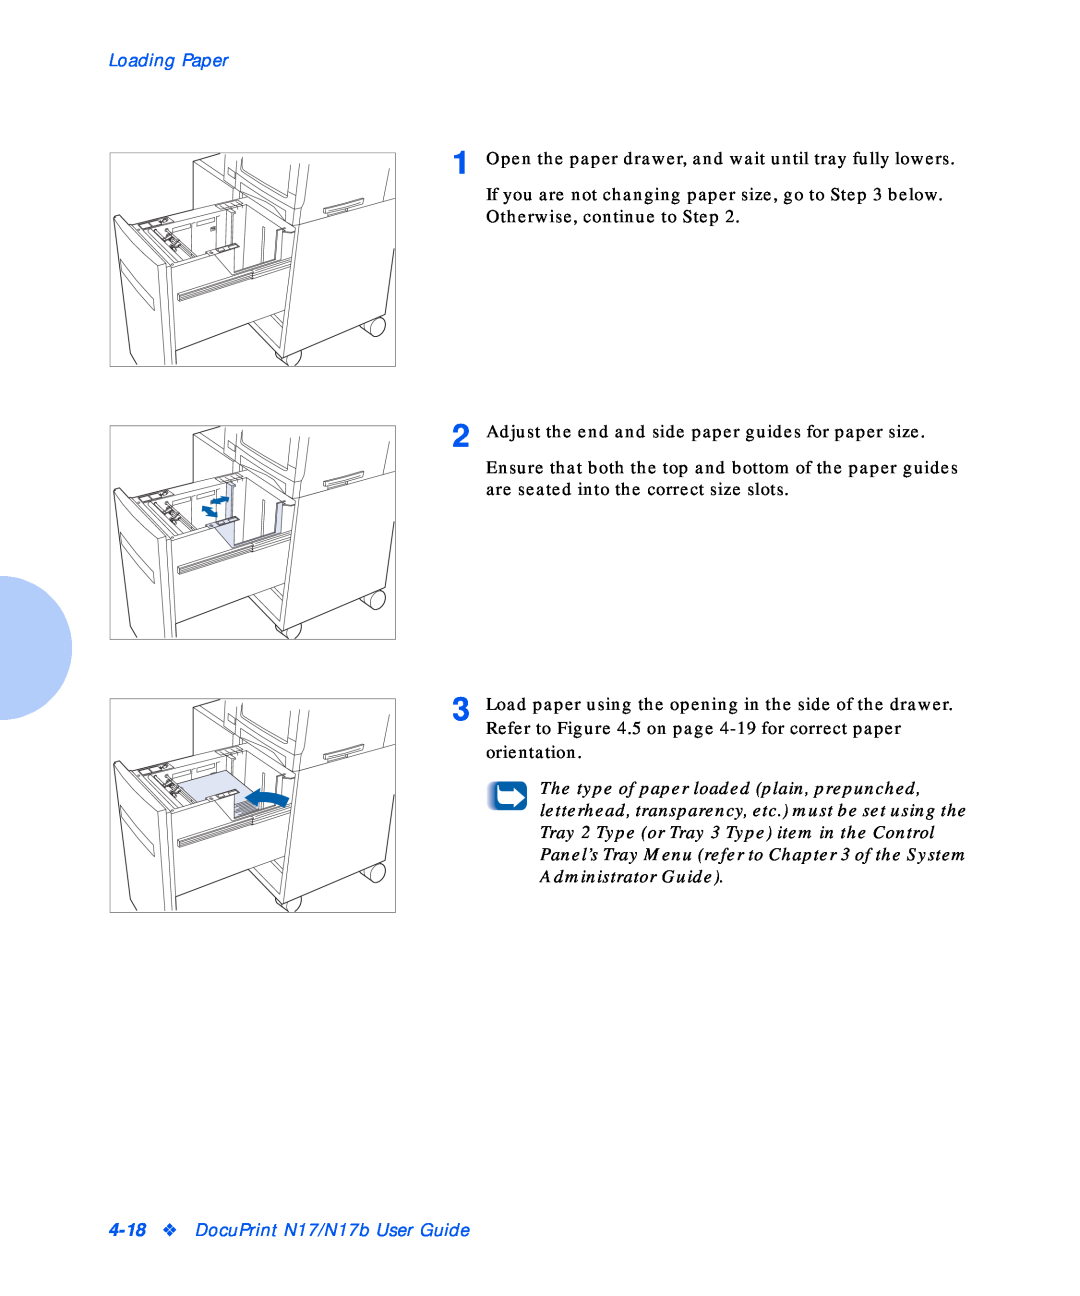 Xerox manual Loading Paper, DocuPrint N17/N17b User Guide 